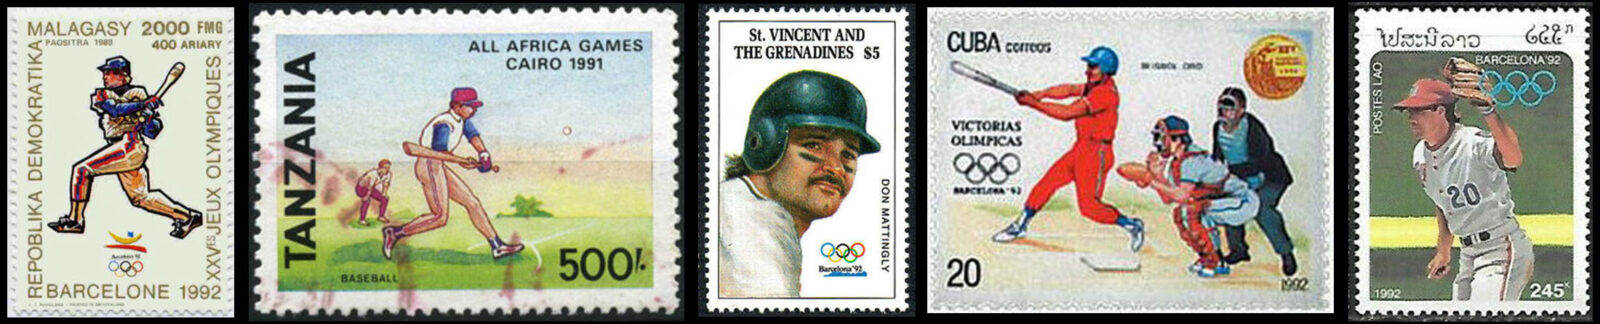 1990 to 1994 Baseball Postage Stamps Header